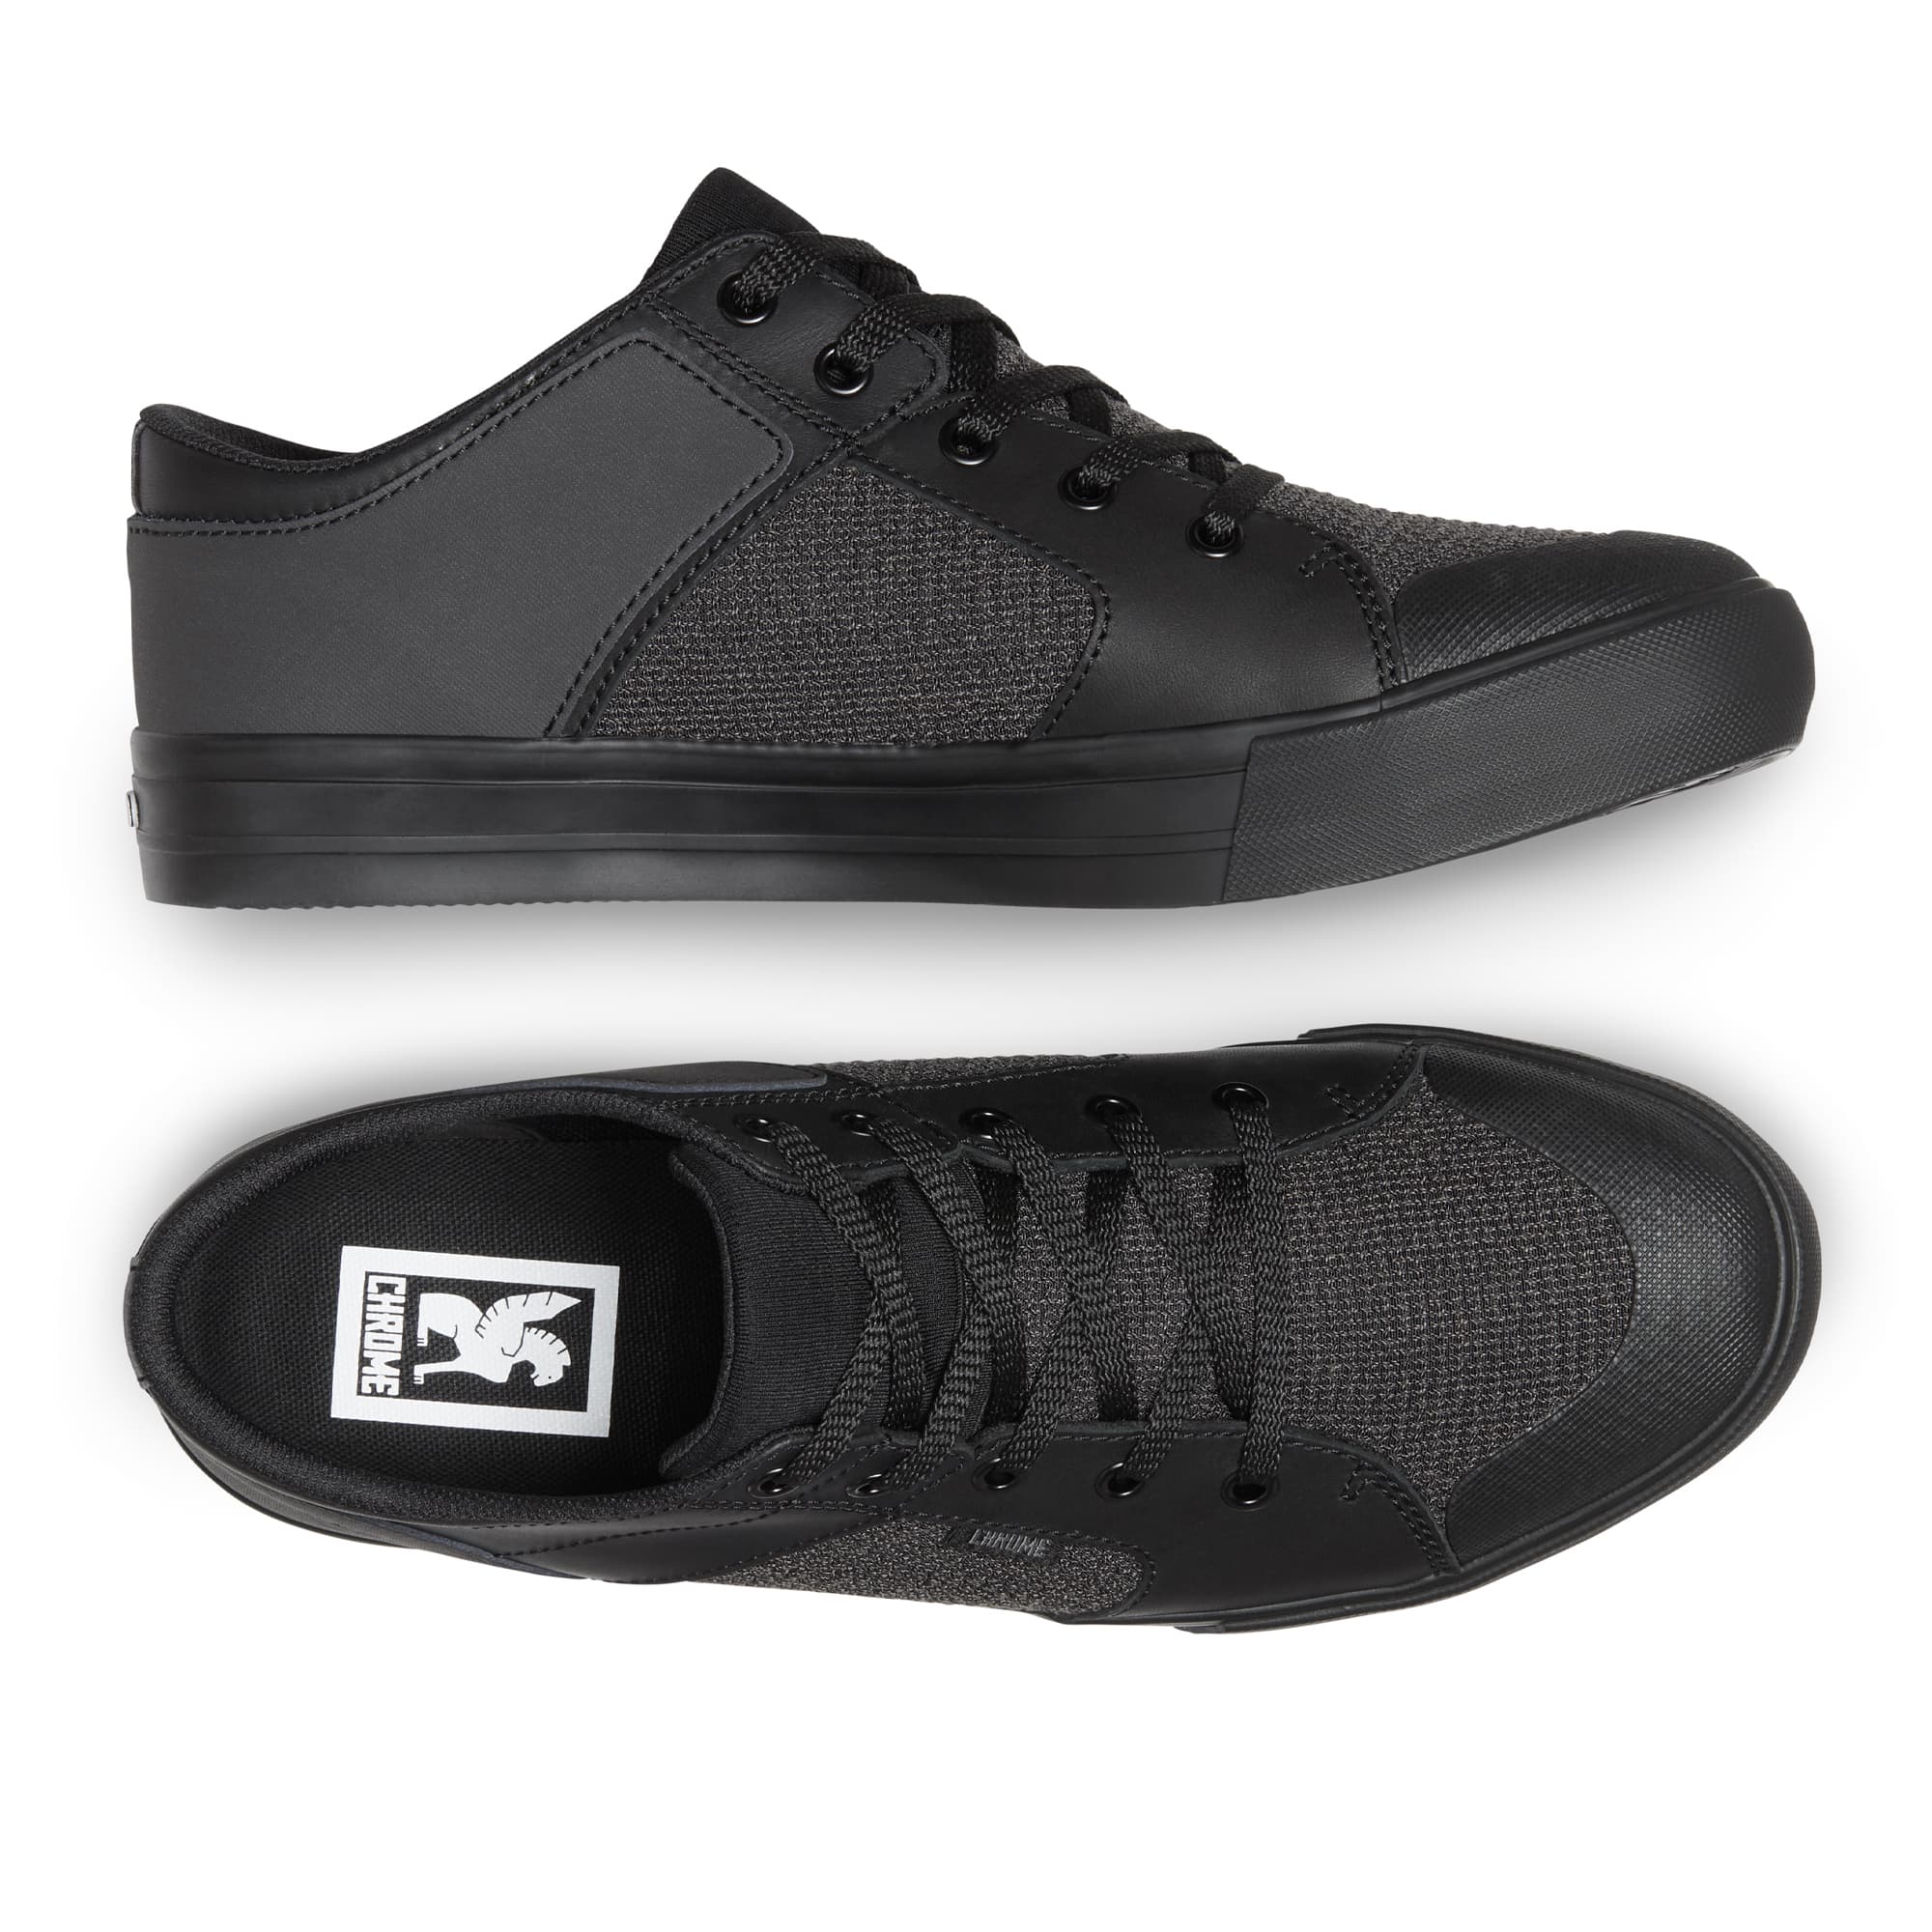 Southside SPD sneaker low profile in black with black inside view